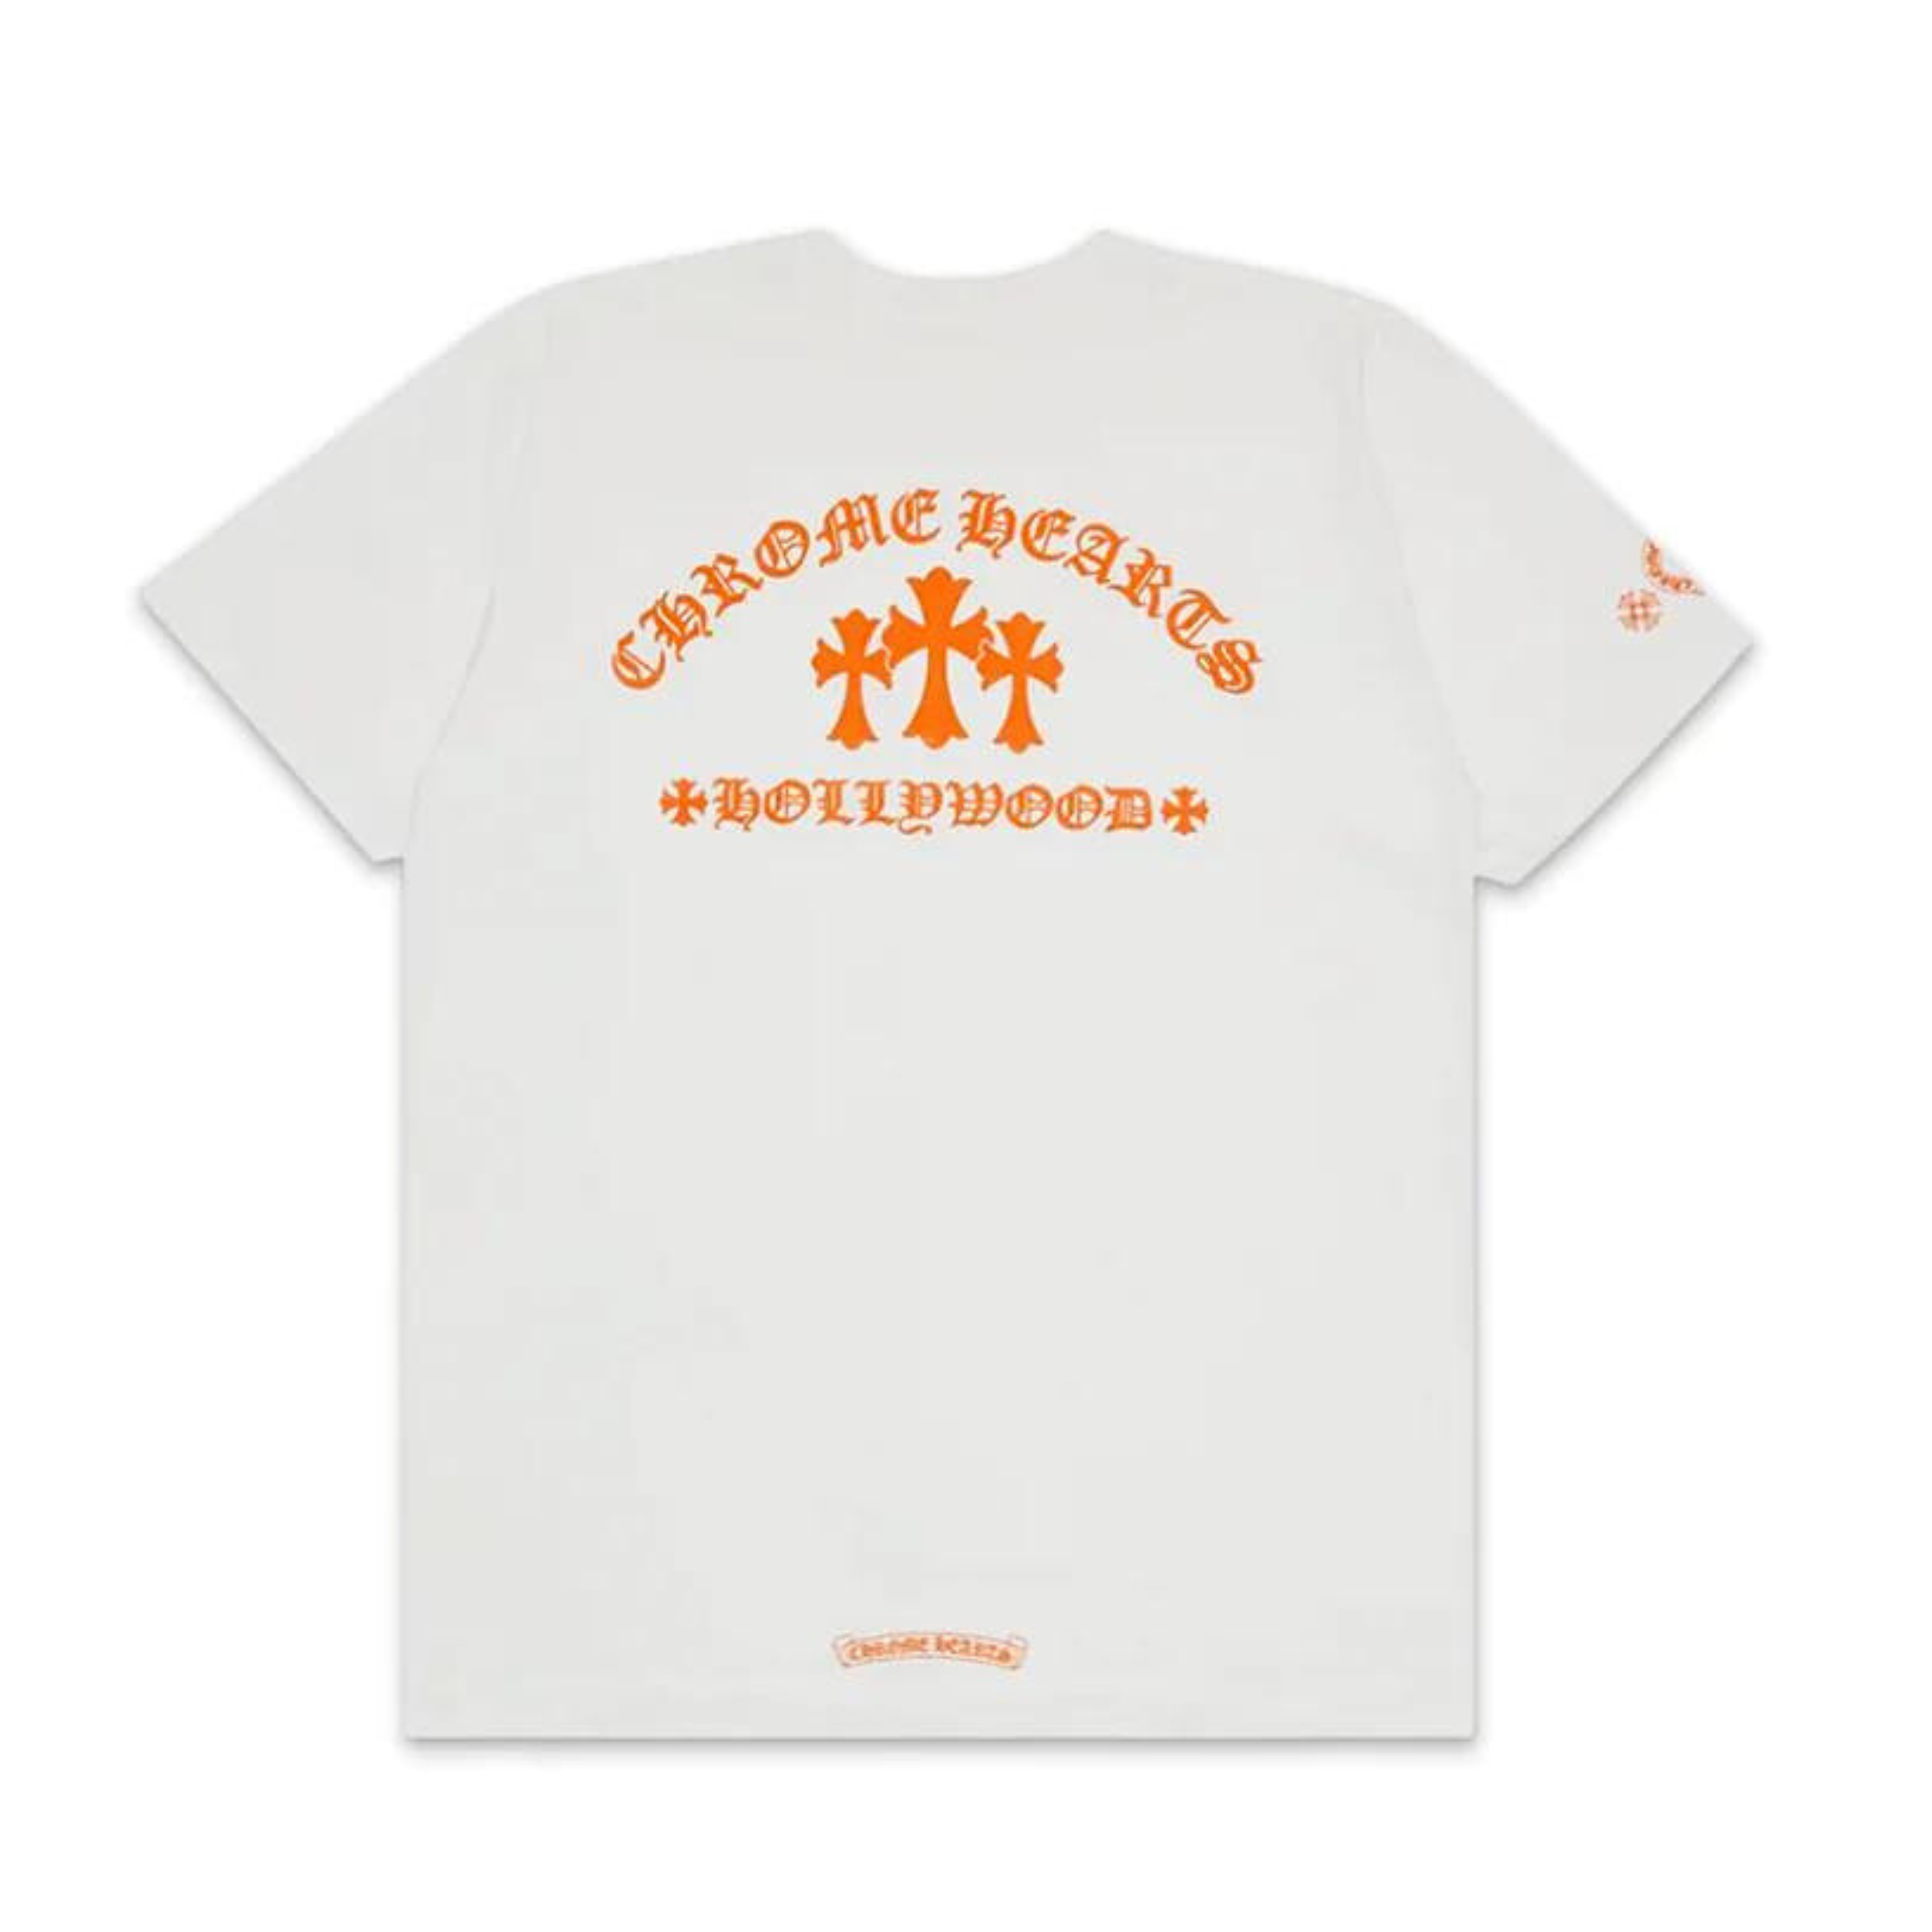 Chrome Hearts Hollywood Cross T-Shirt White Orange